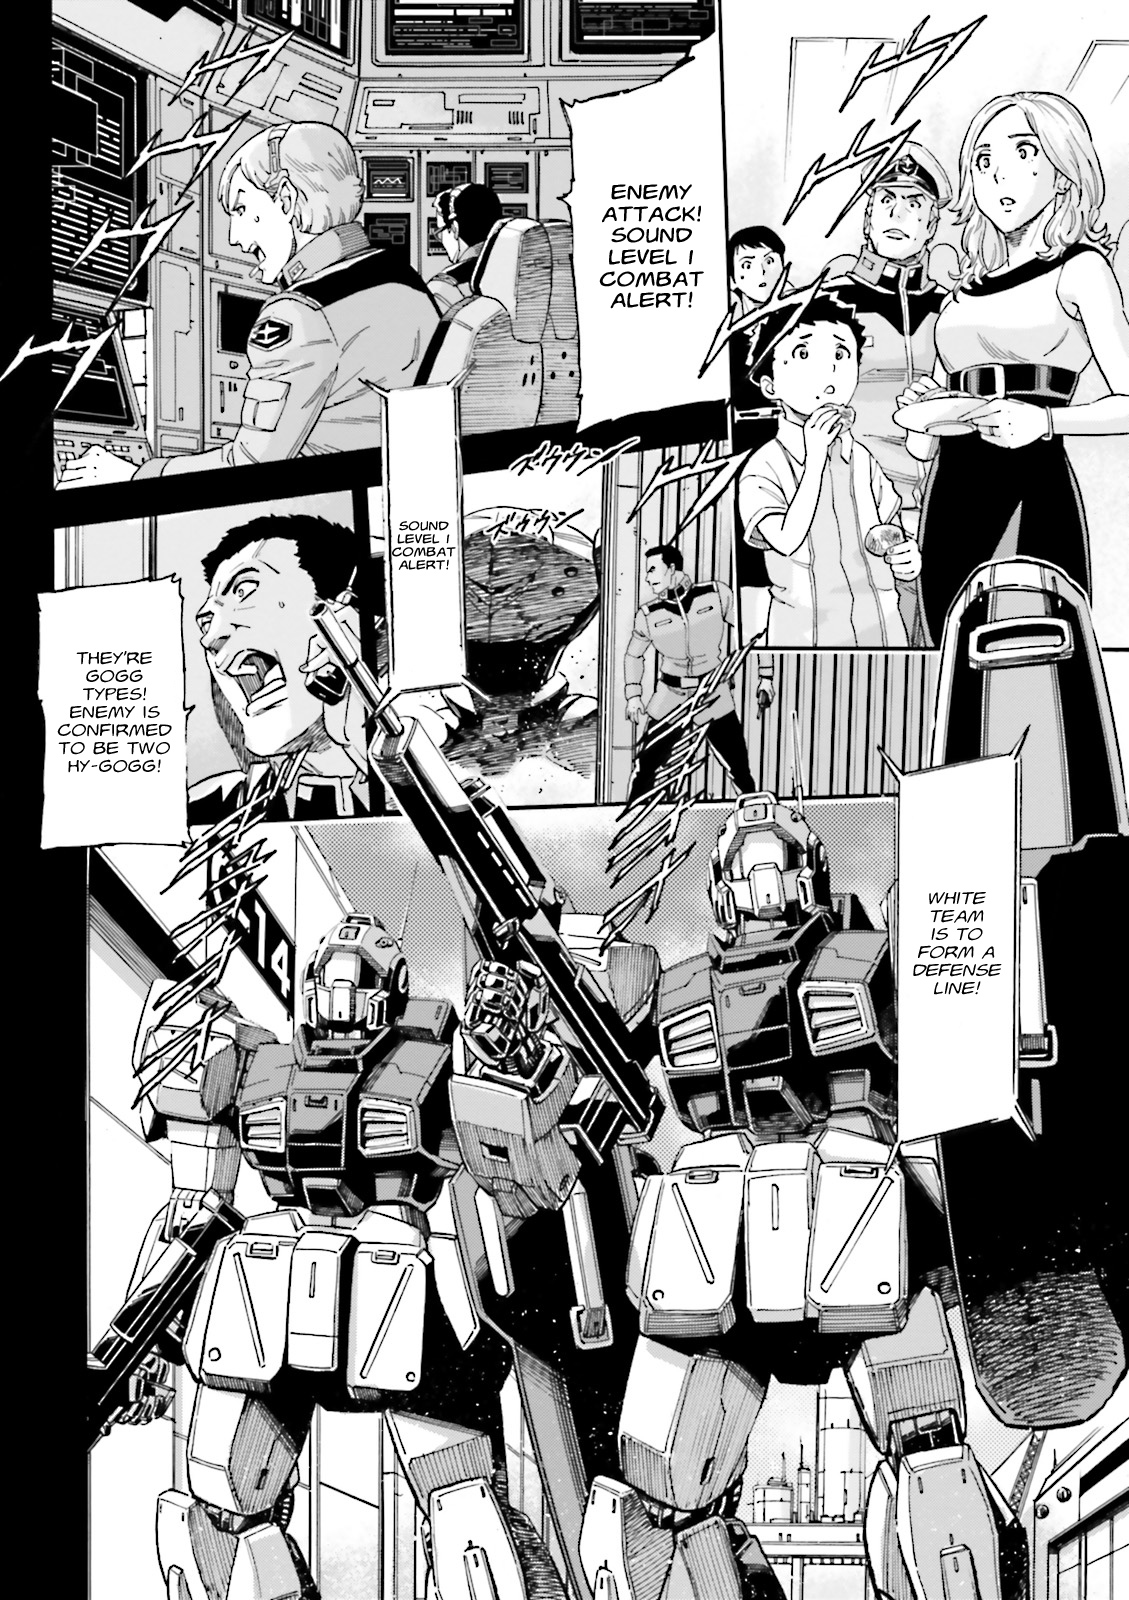 Kidou Senshi Gundam UC (Unicorn) Bande Dessinée: Episode 0 Vol. 1 Ch. 2 Carlos Craig <Faith and Rebellion>